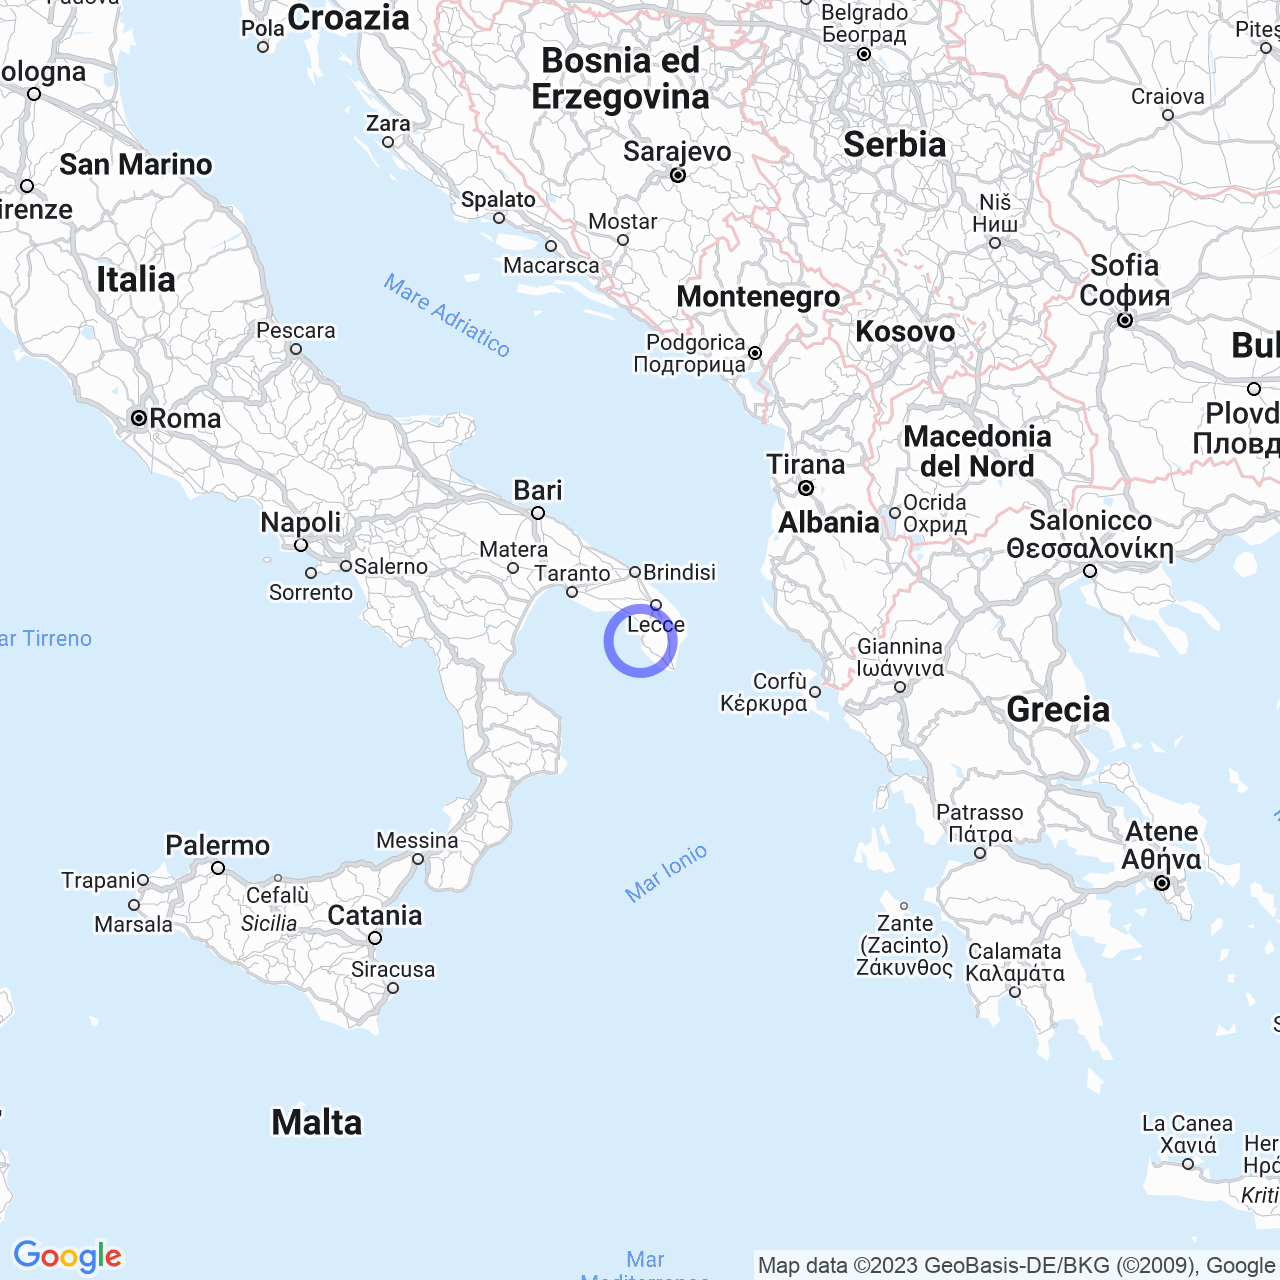 Gallipoli: the beautiful Salento town on the Ionian Sea.